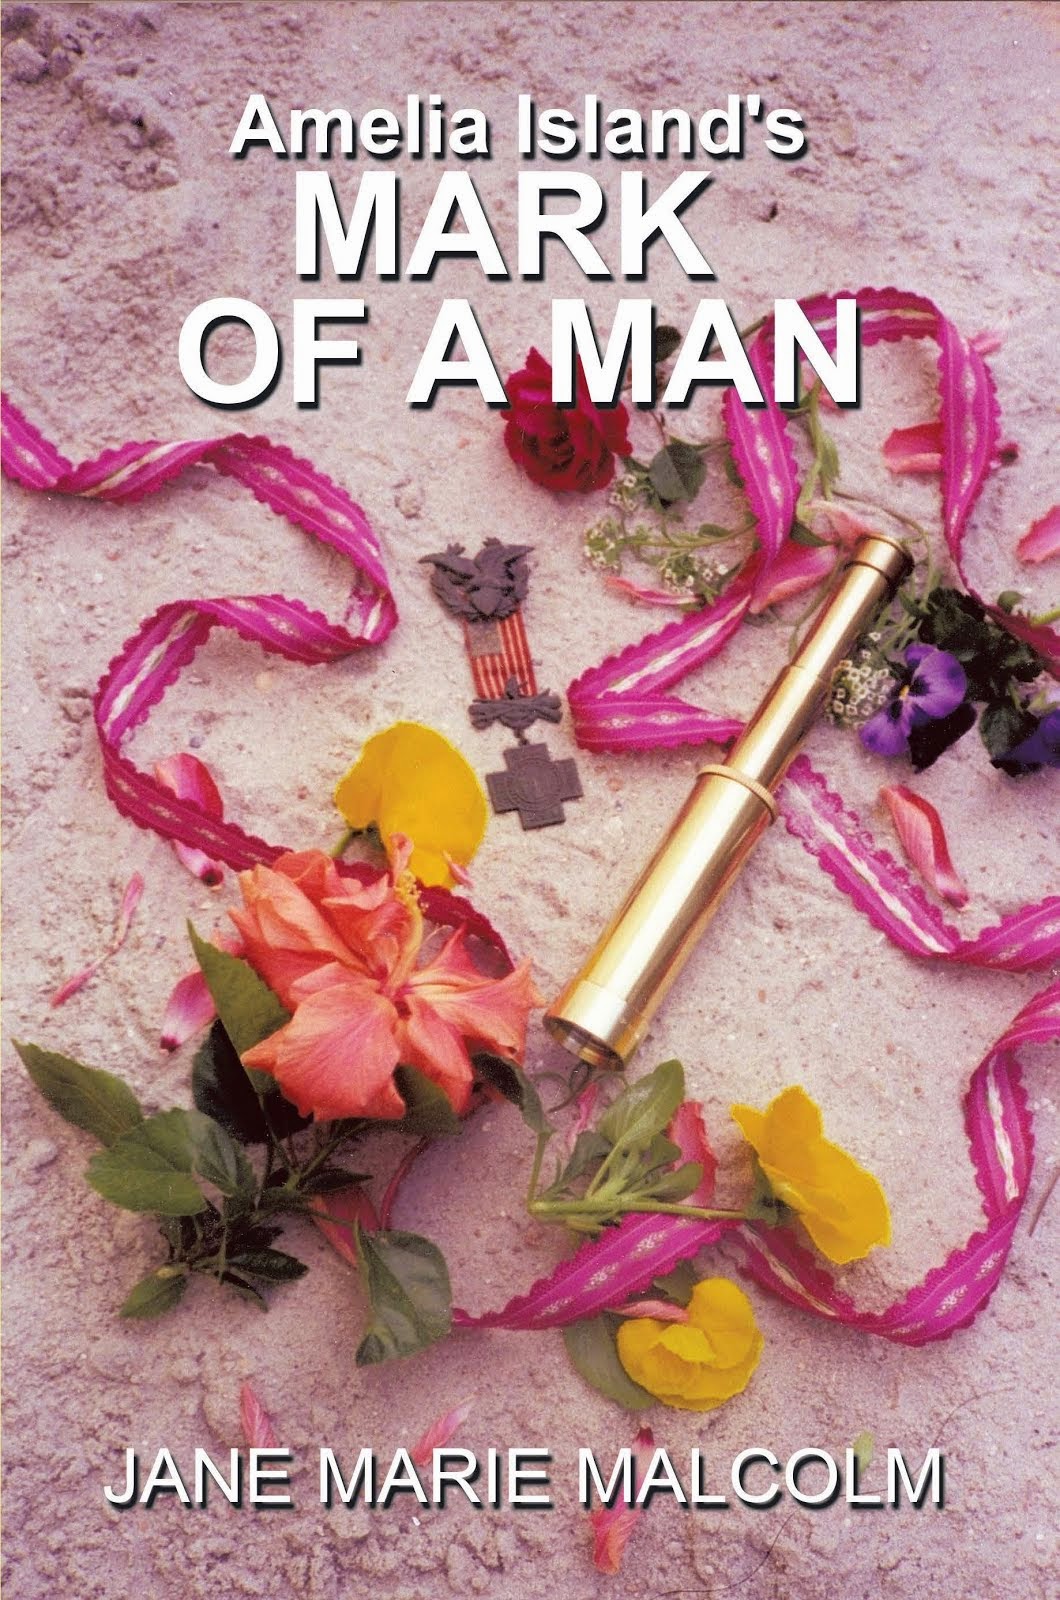 LATEST RELEASE - Amelia Island's MARK OF A MAN, the RAINS, the RAGE, the ROMANCE - ebook-$3.99